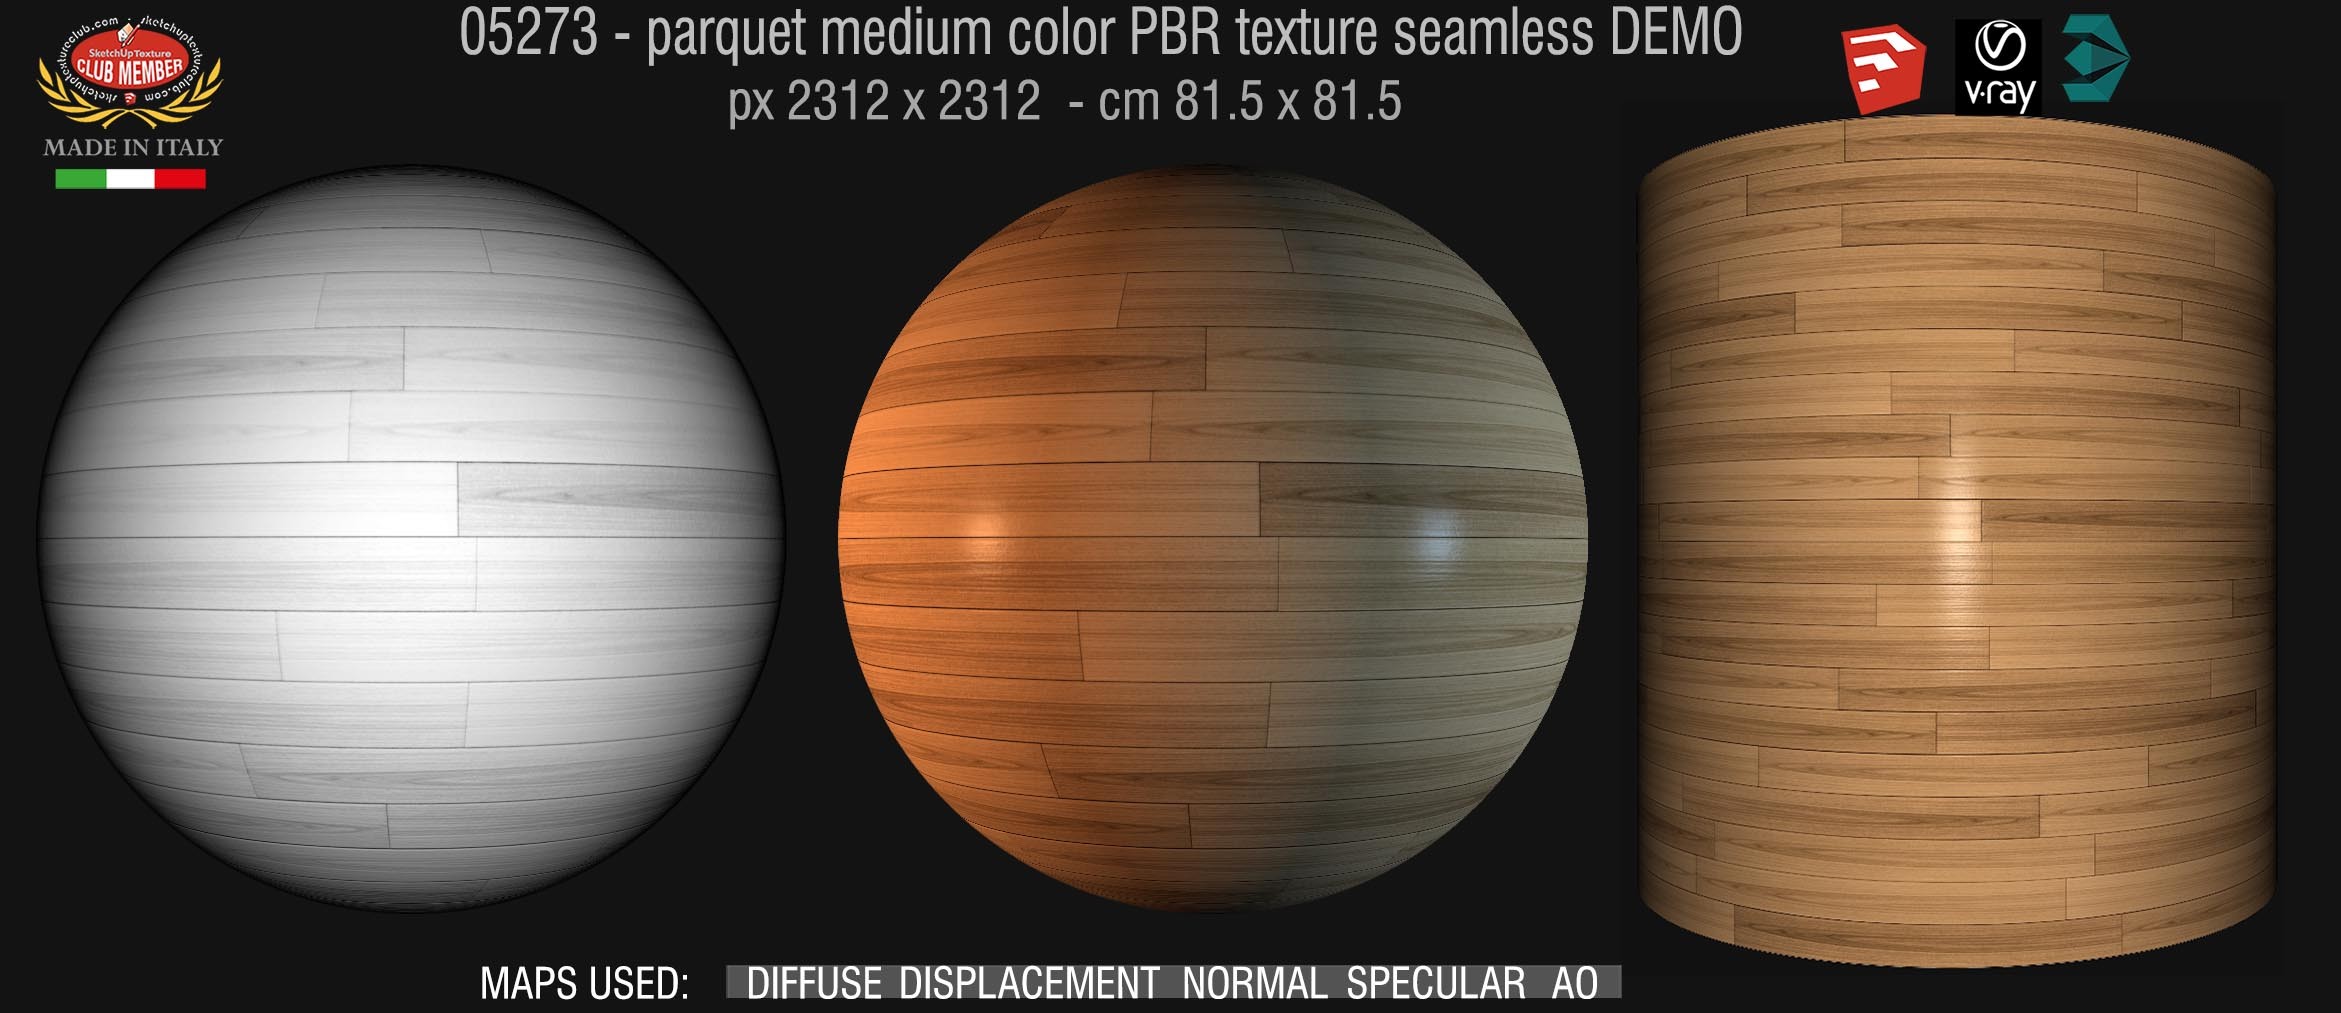 05273 parquet medium color PBR texture seamless DEMO